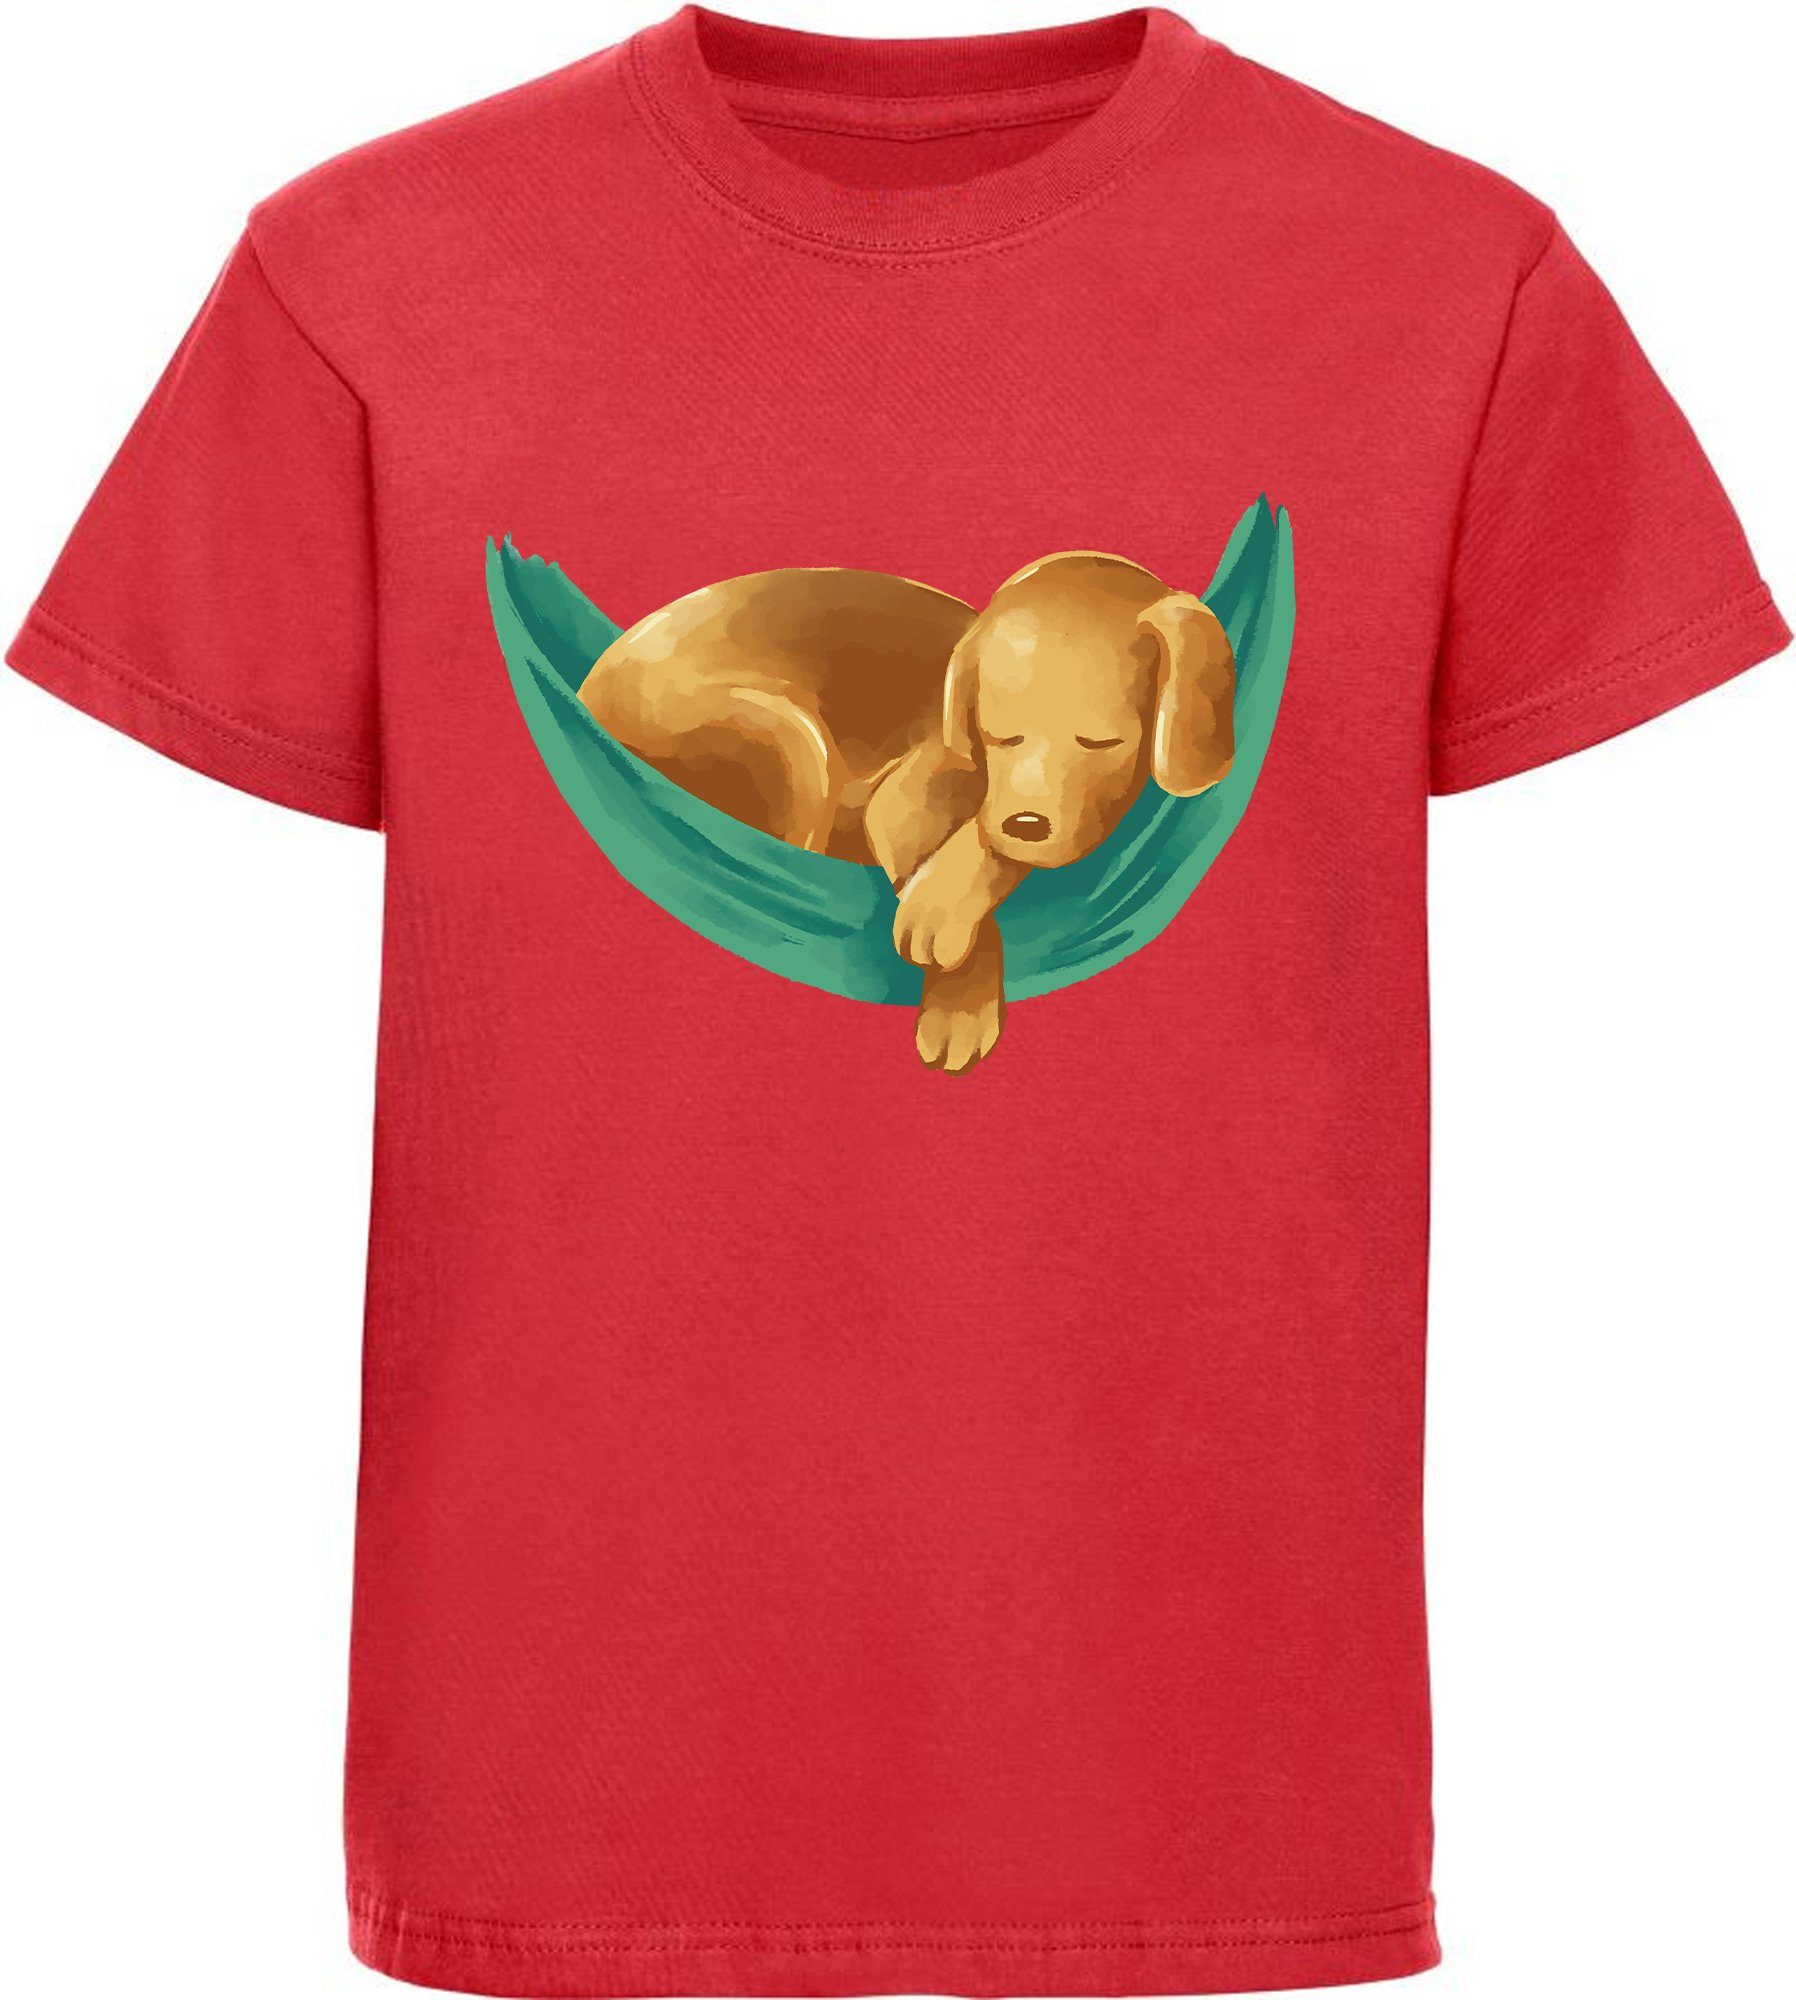 MyDesign24 T-Shirt Kinder Aufdruck, Hängematte Print in Labrador - Hunde mit bedruckt Baumwollshirt Welpe rot i245 Shirt